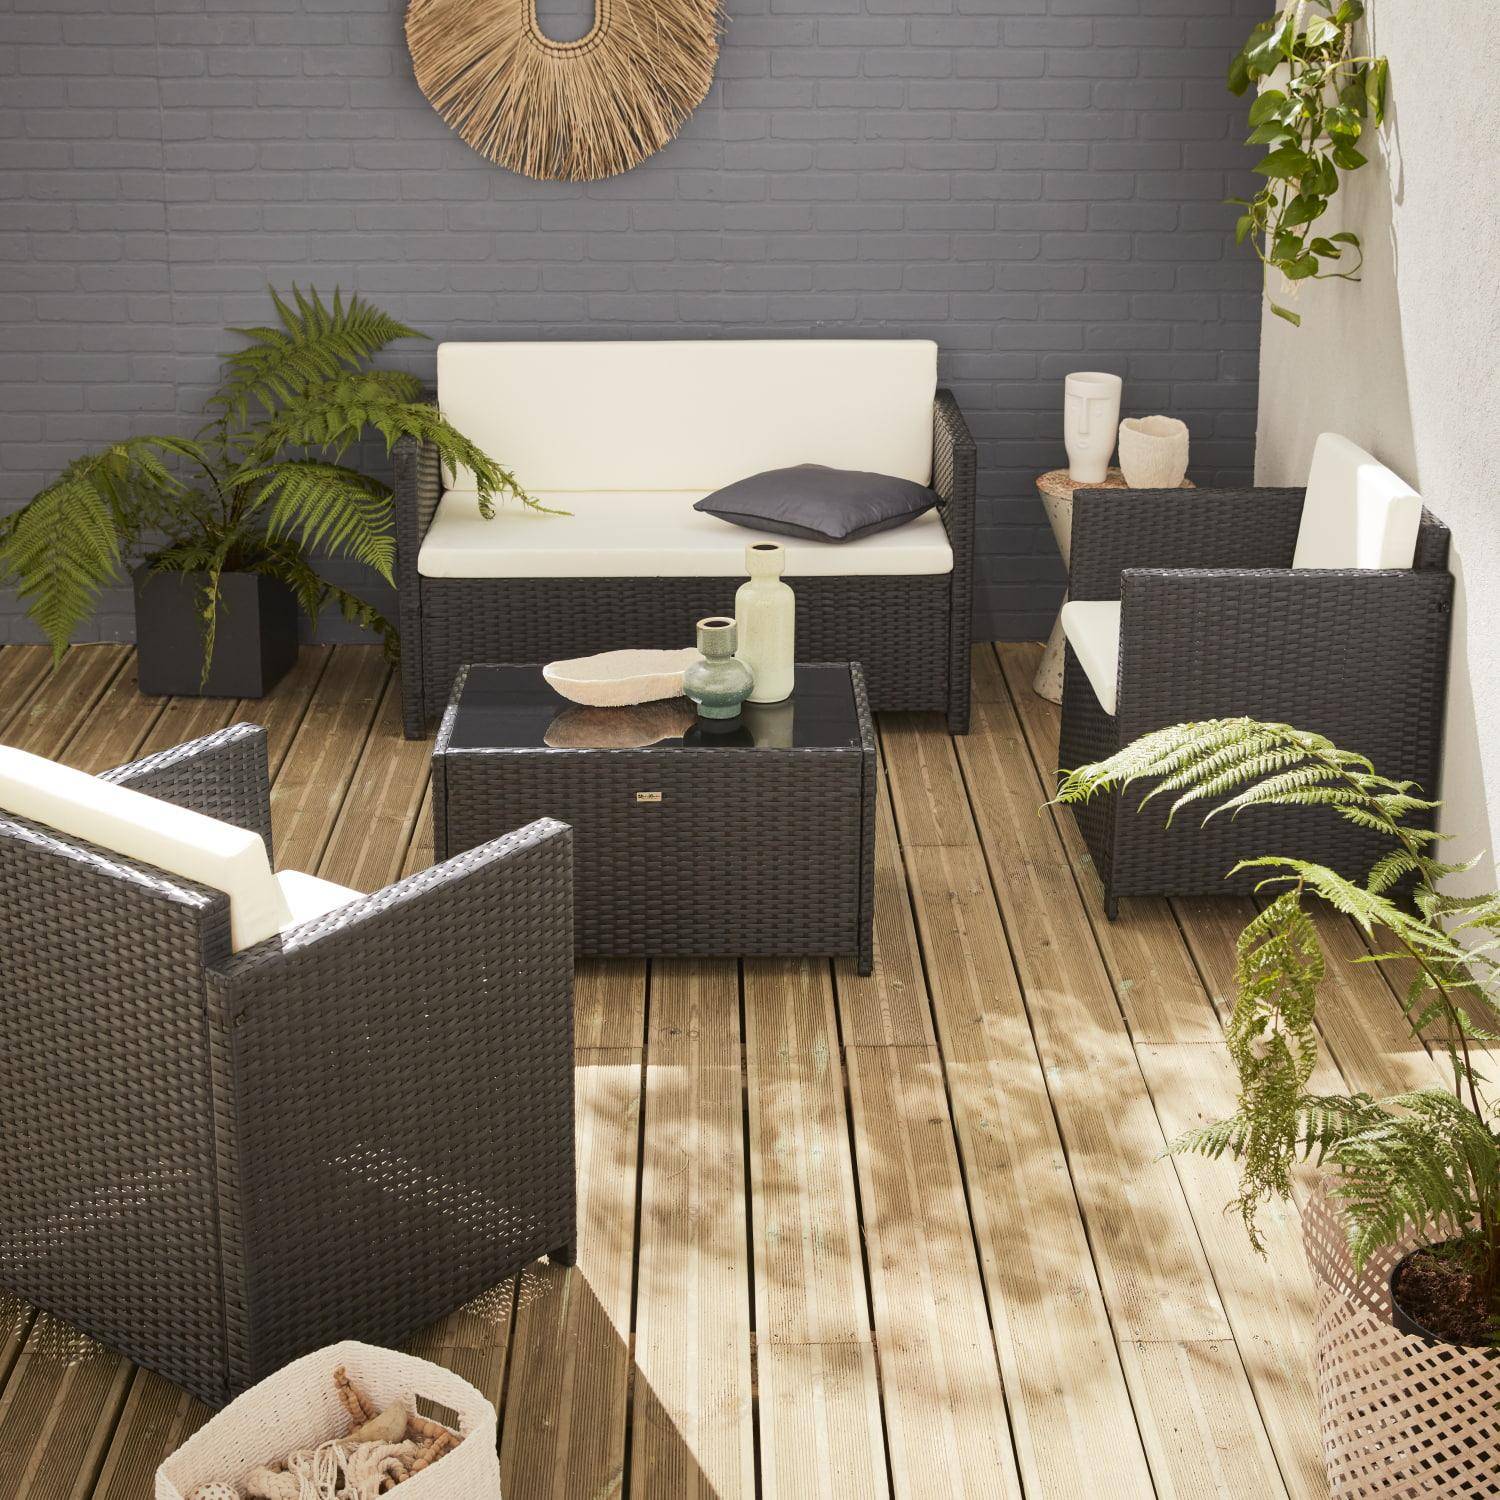 Muebles de jardín, conjunto sofá de exterior, Negro crudo, 4 plazas, rattan sintético, resina trenzada - Perugia,sweeek,Photo1